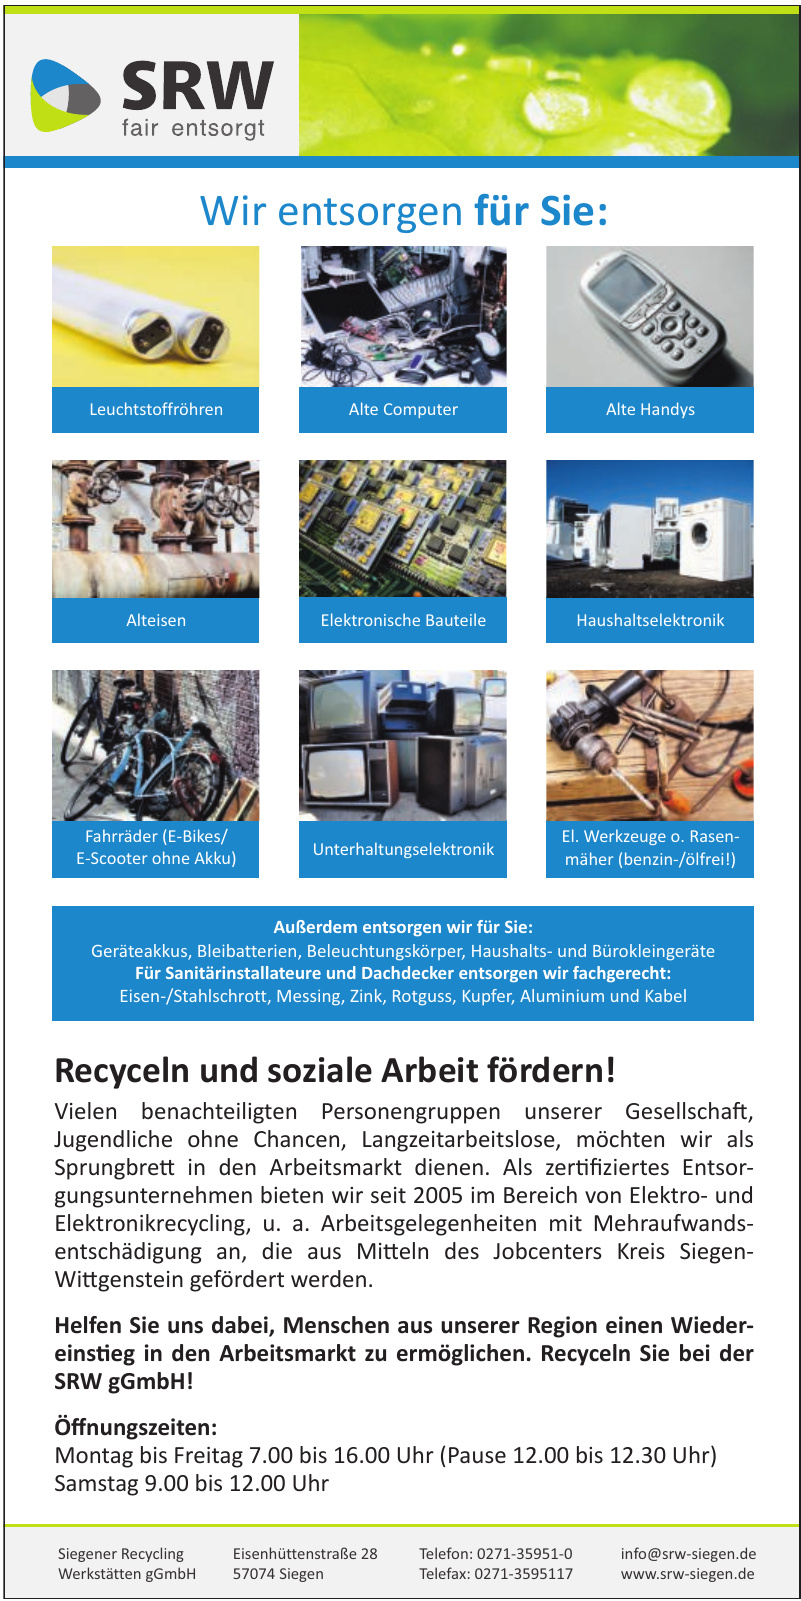 Siegener Recycling Werkstätten gGmbH